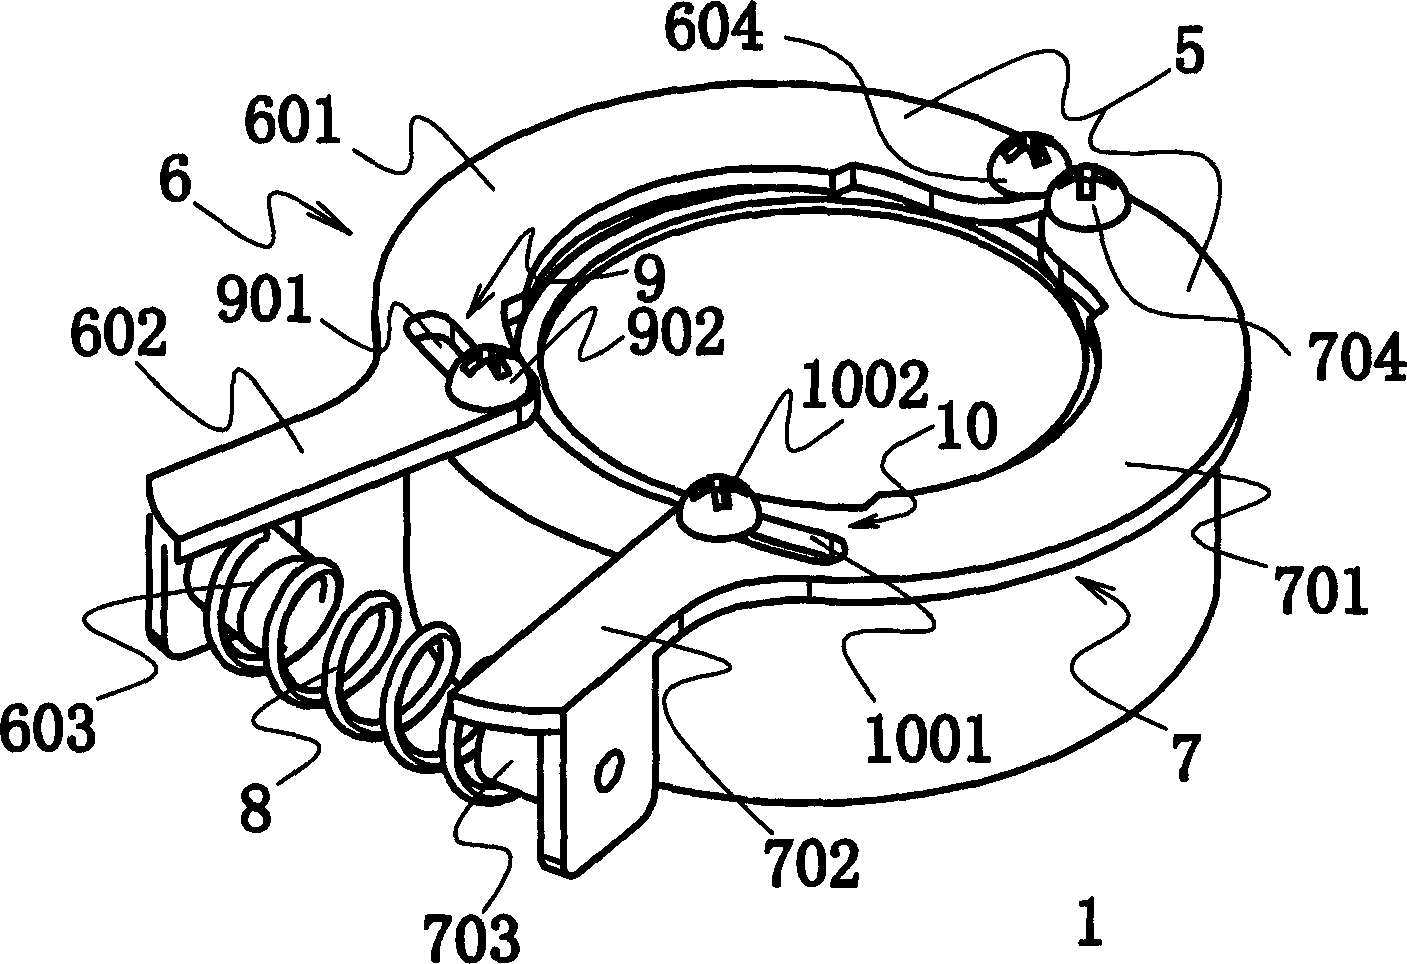 Low-concentration sampling nozzle forceps clip binder